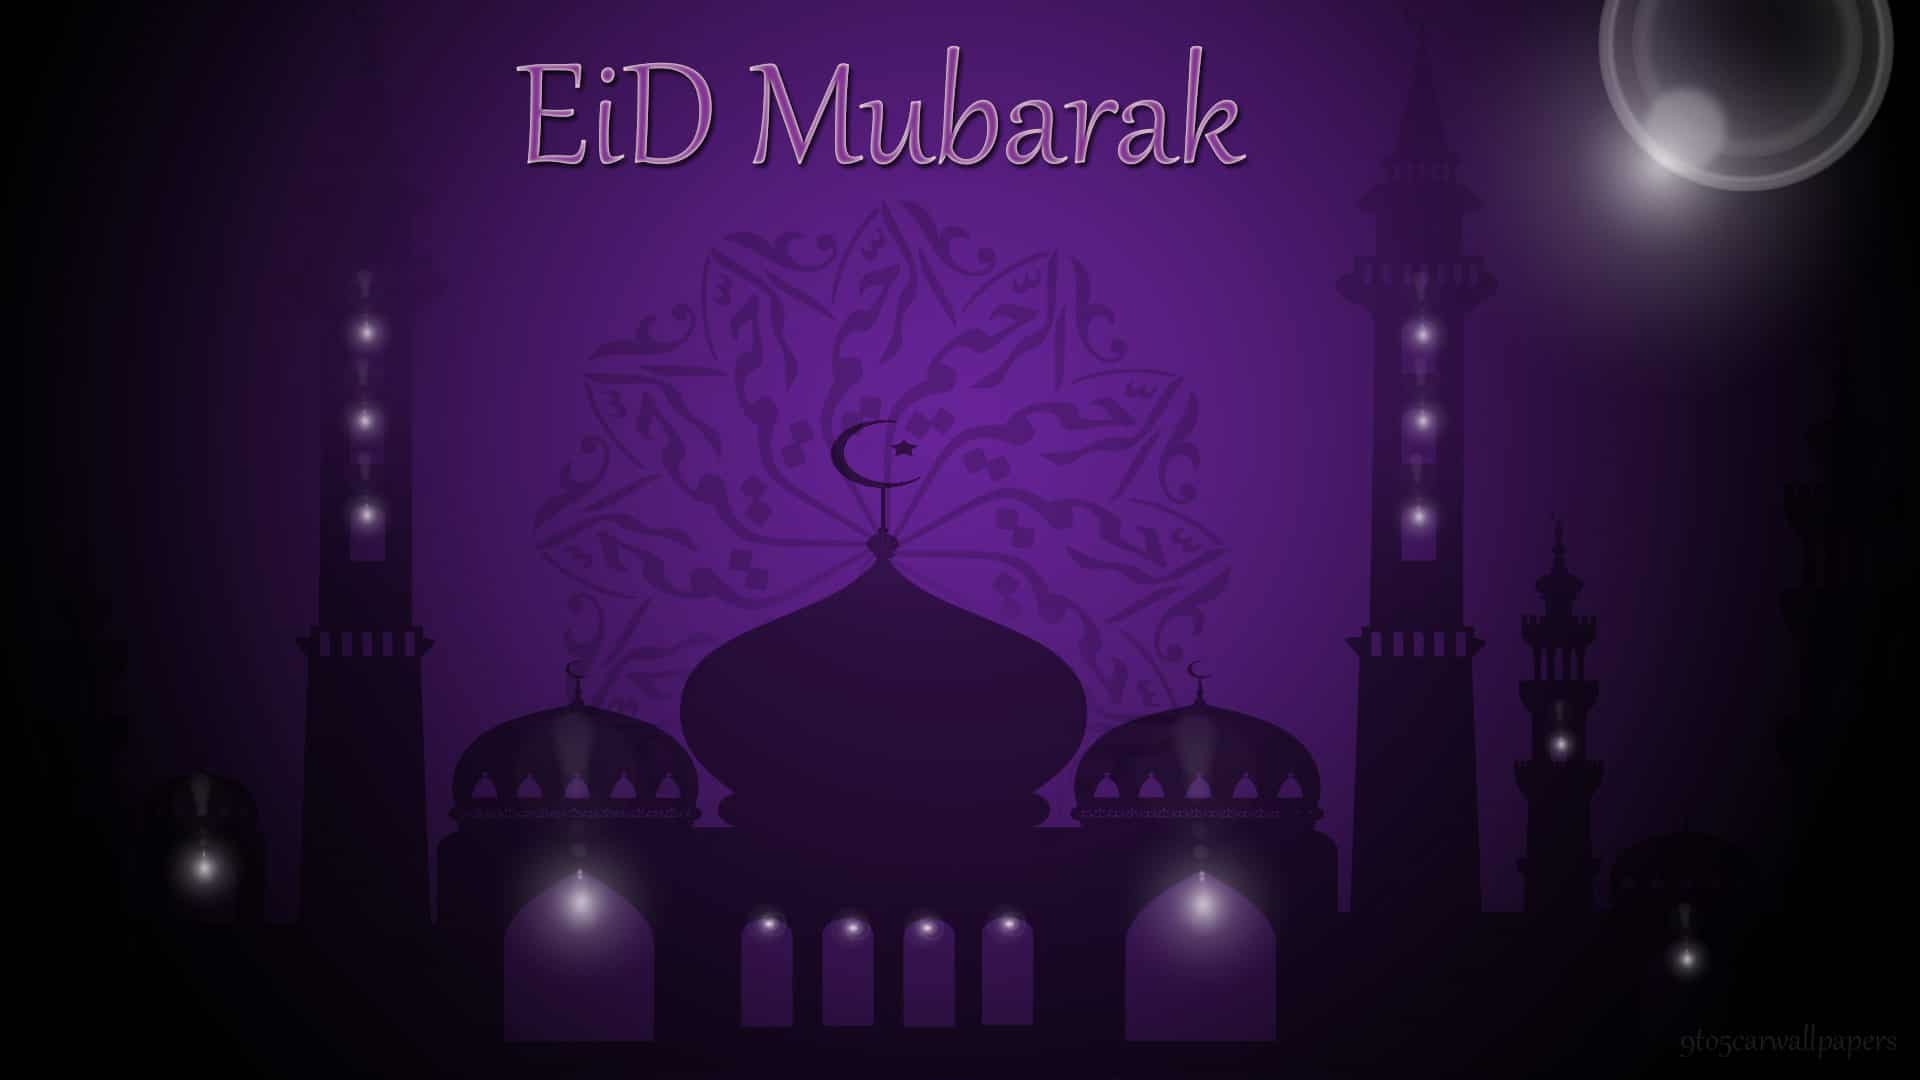  Eid Mubarak Images